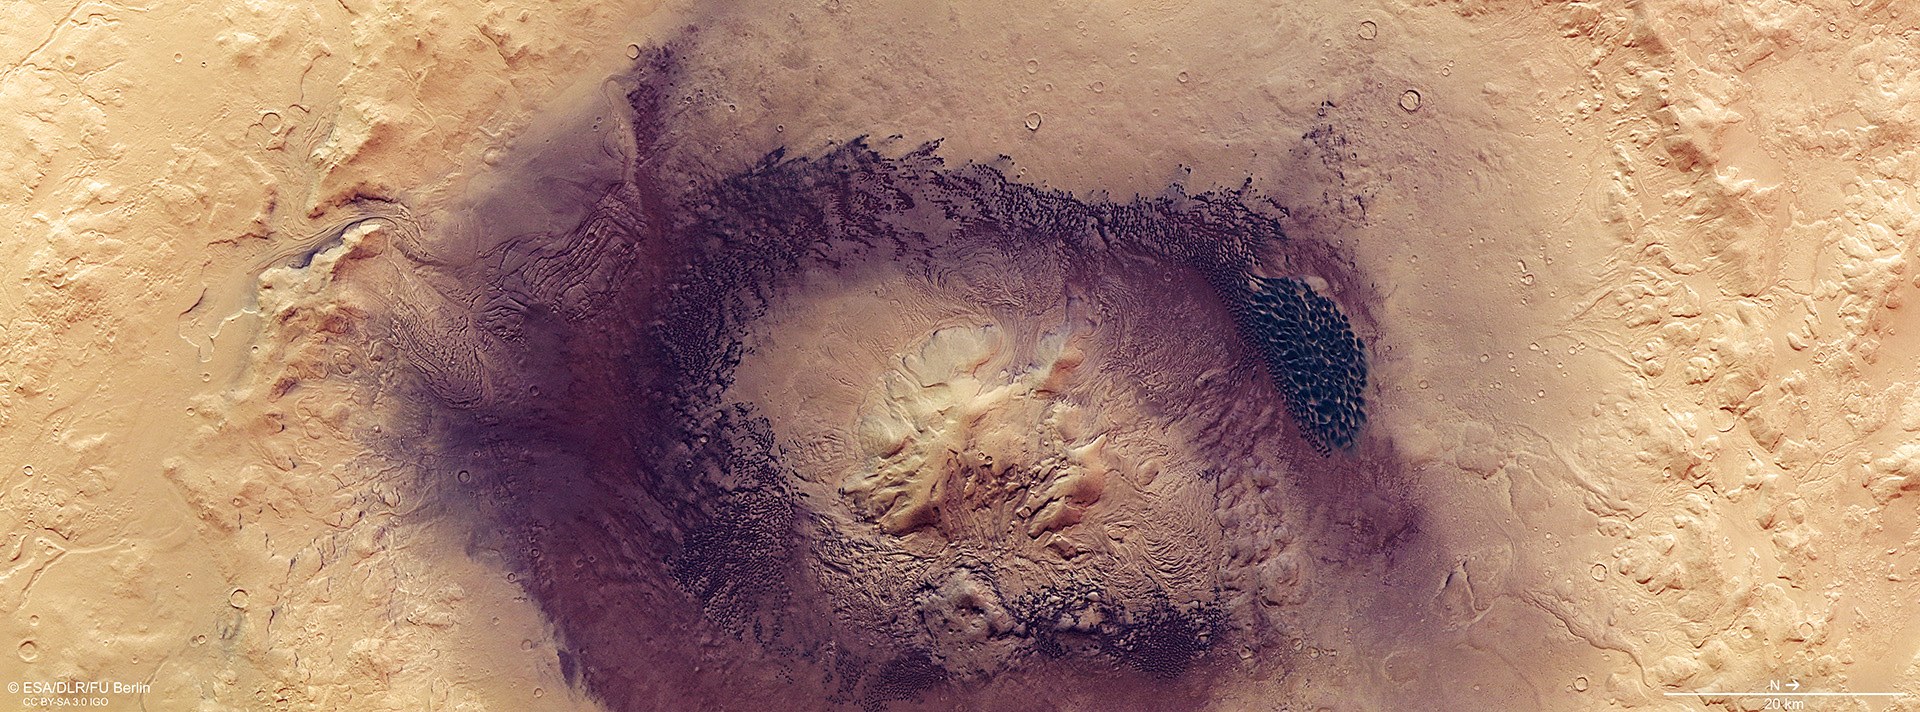 Colour plan view of Moreux Crater in Protonilus Mensae